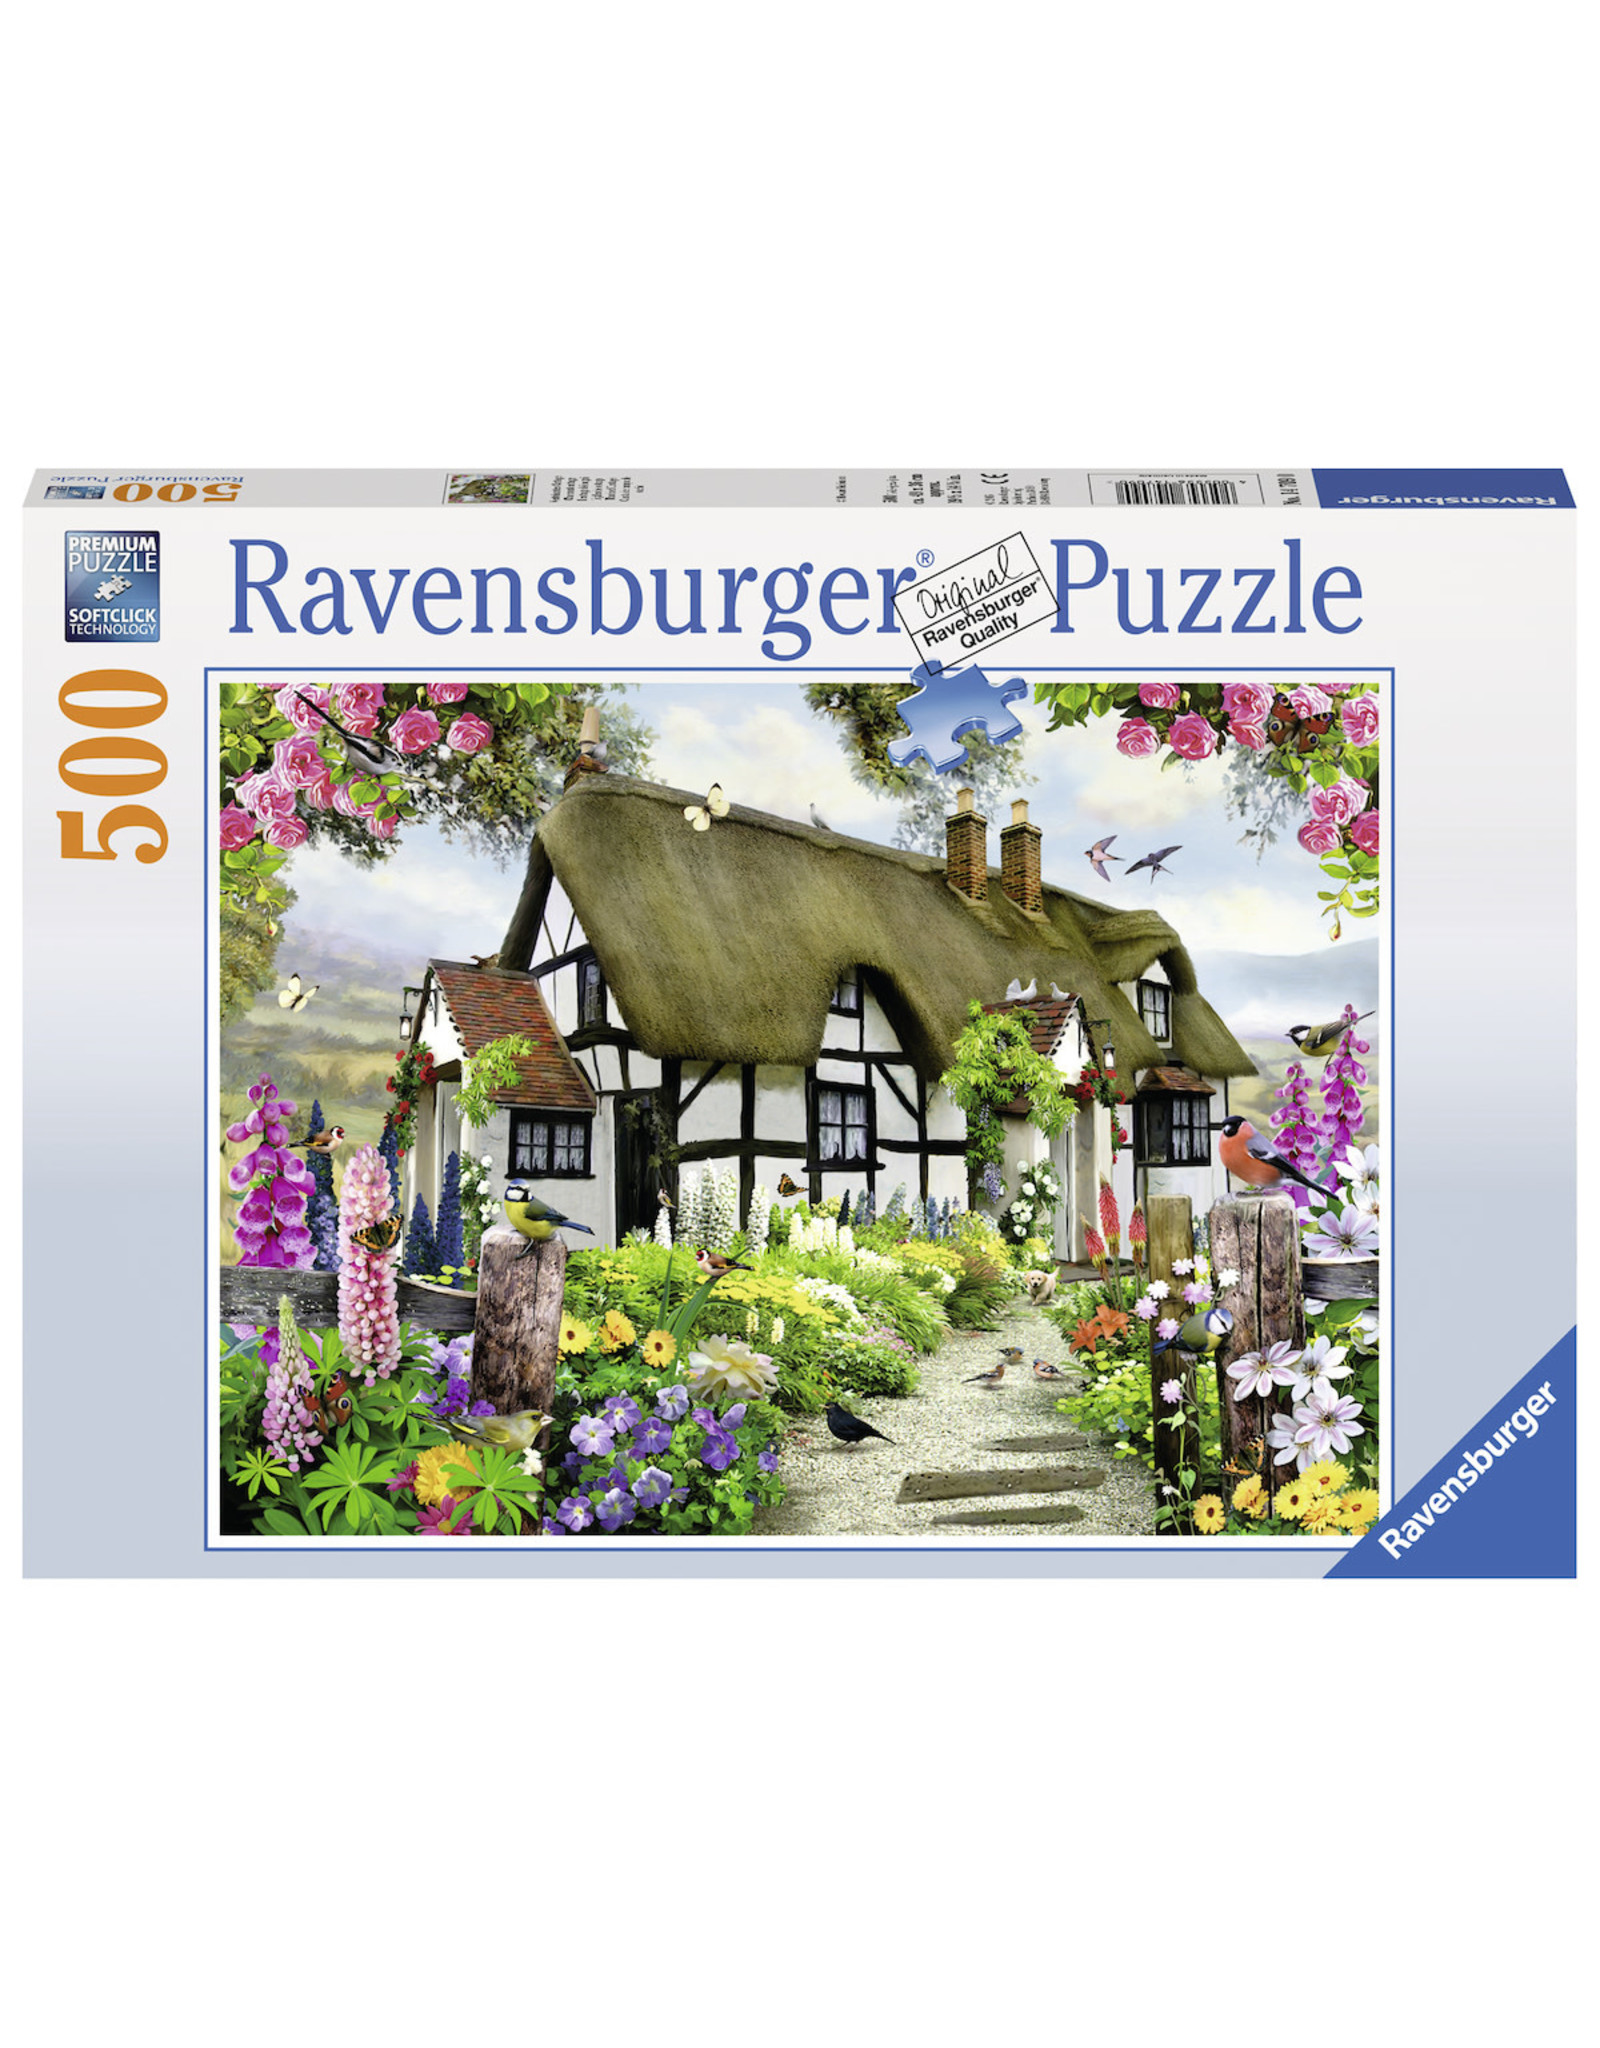 Ravensburger Ravensburger puzzel  Idyllische Cottage 500 stukjes